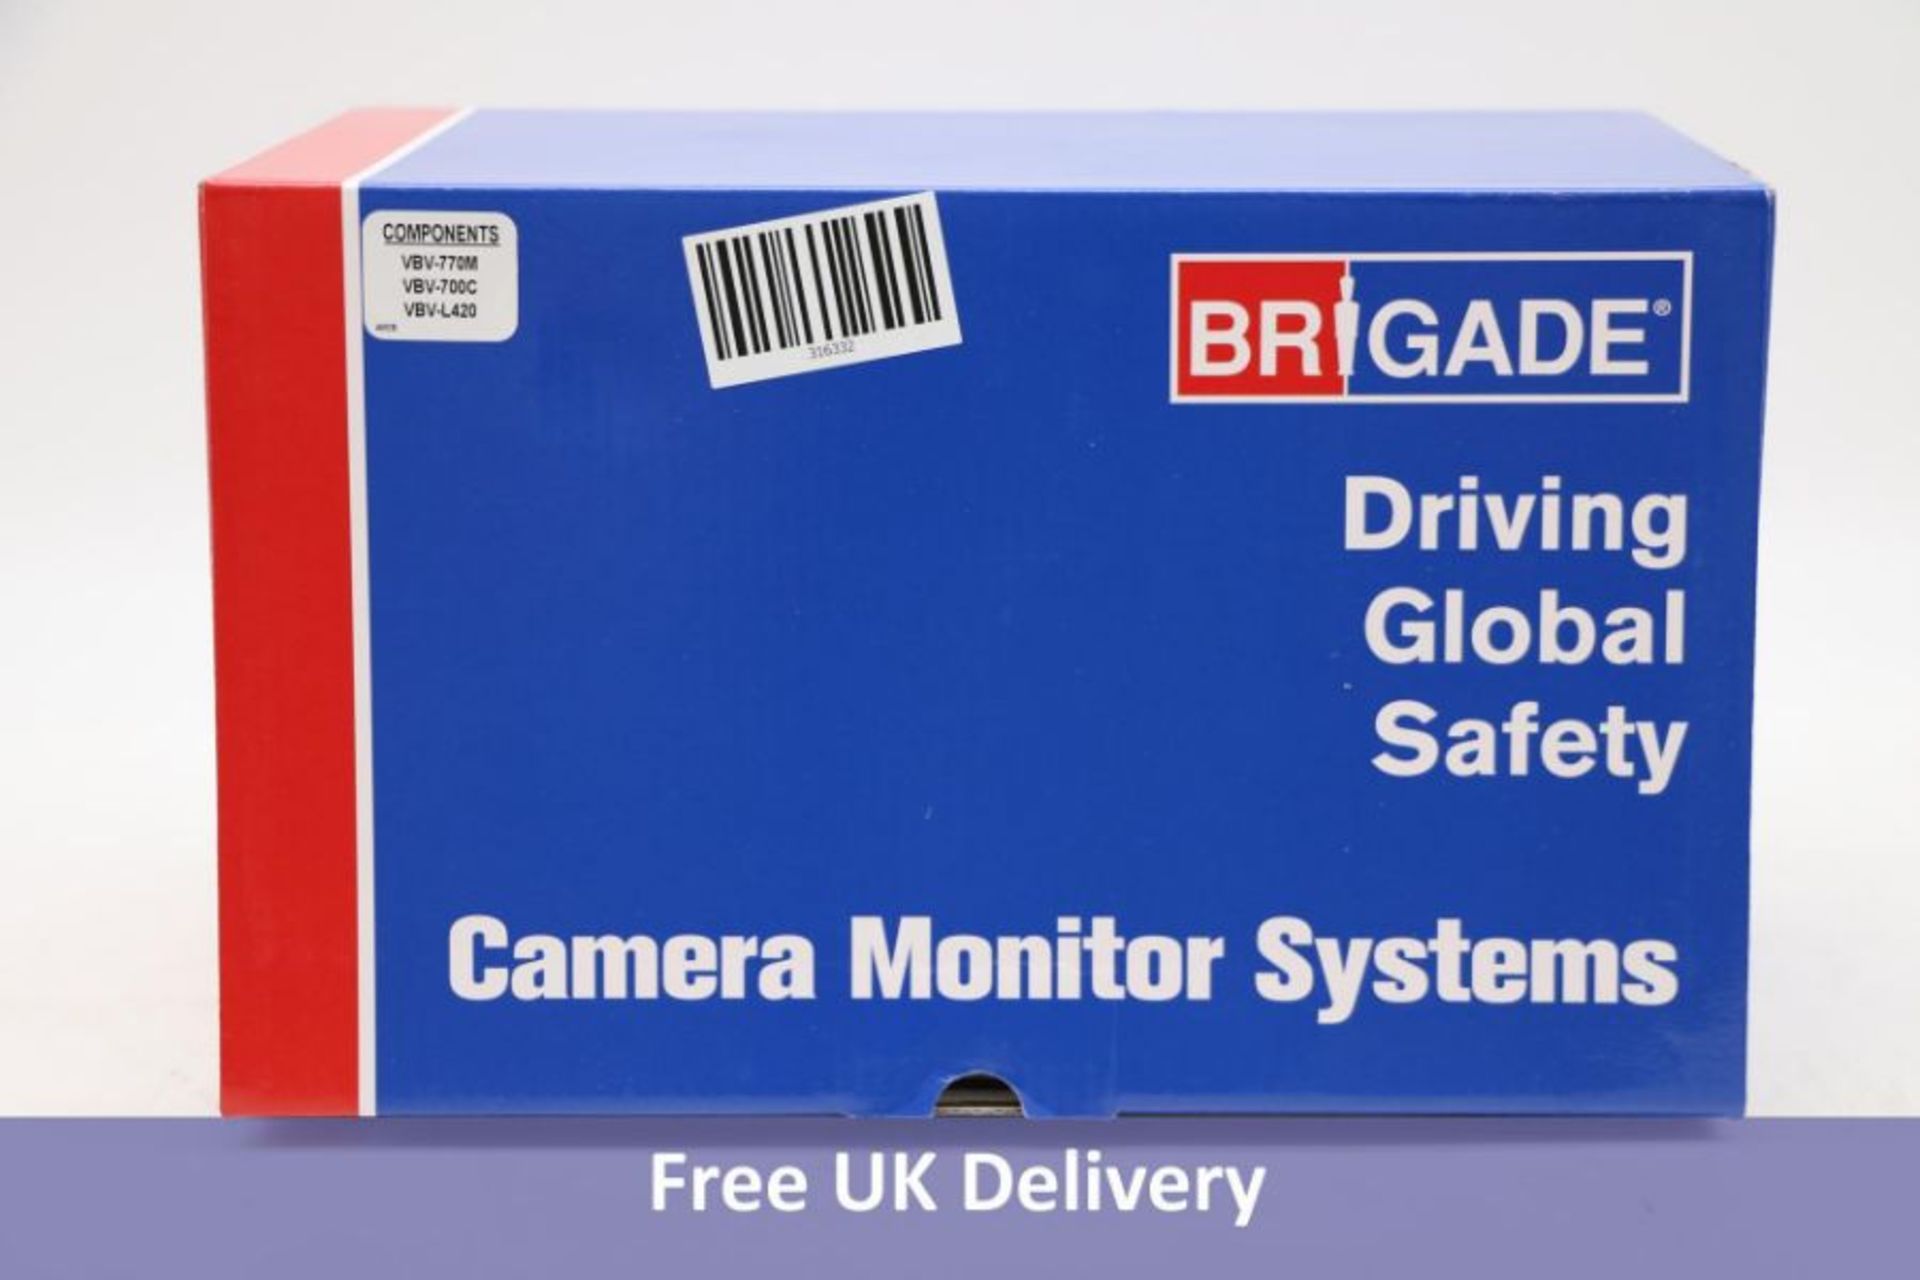 Brigade Single Select Camera Monitor System For Rigid Vehicles, VBV-770-000-4692B